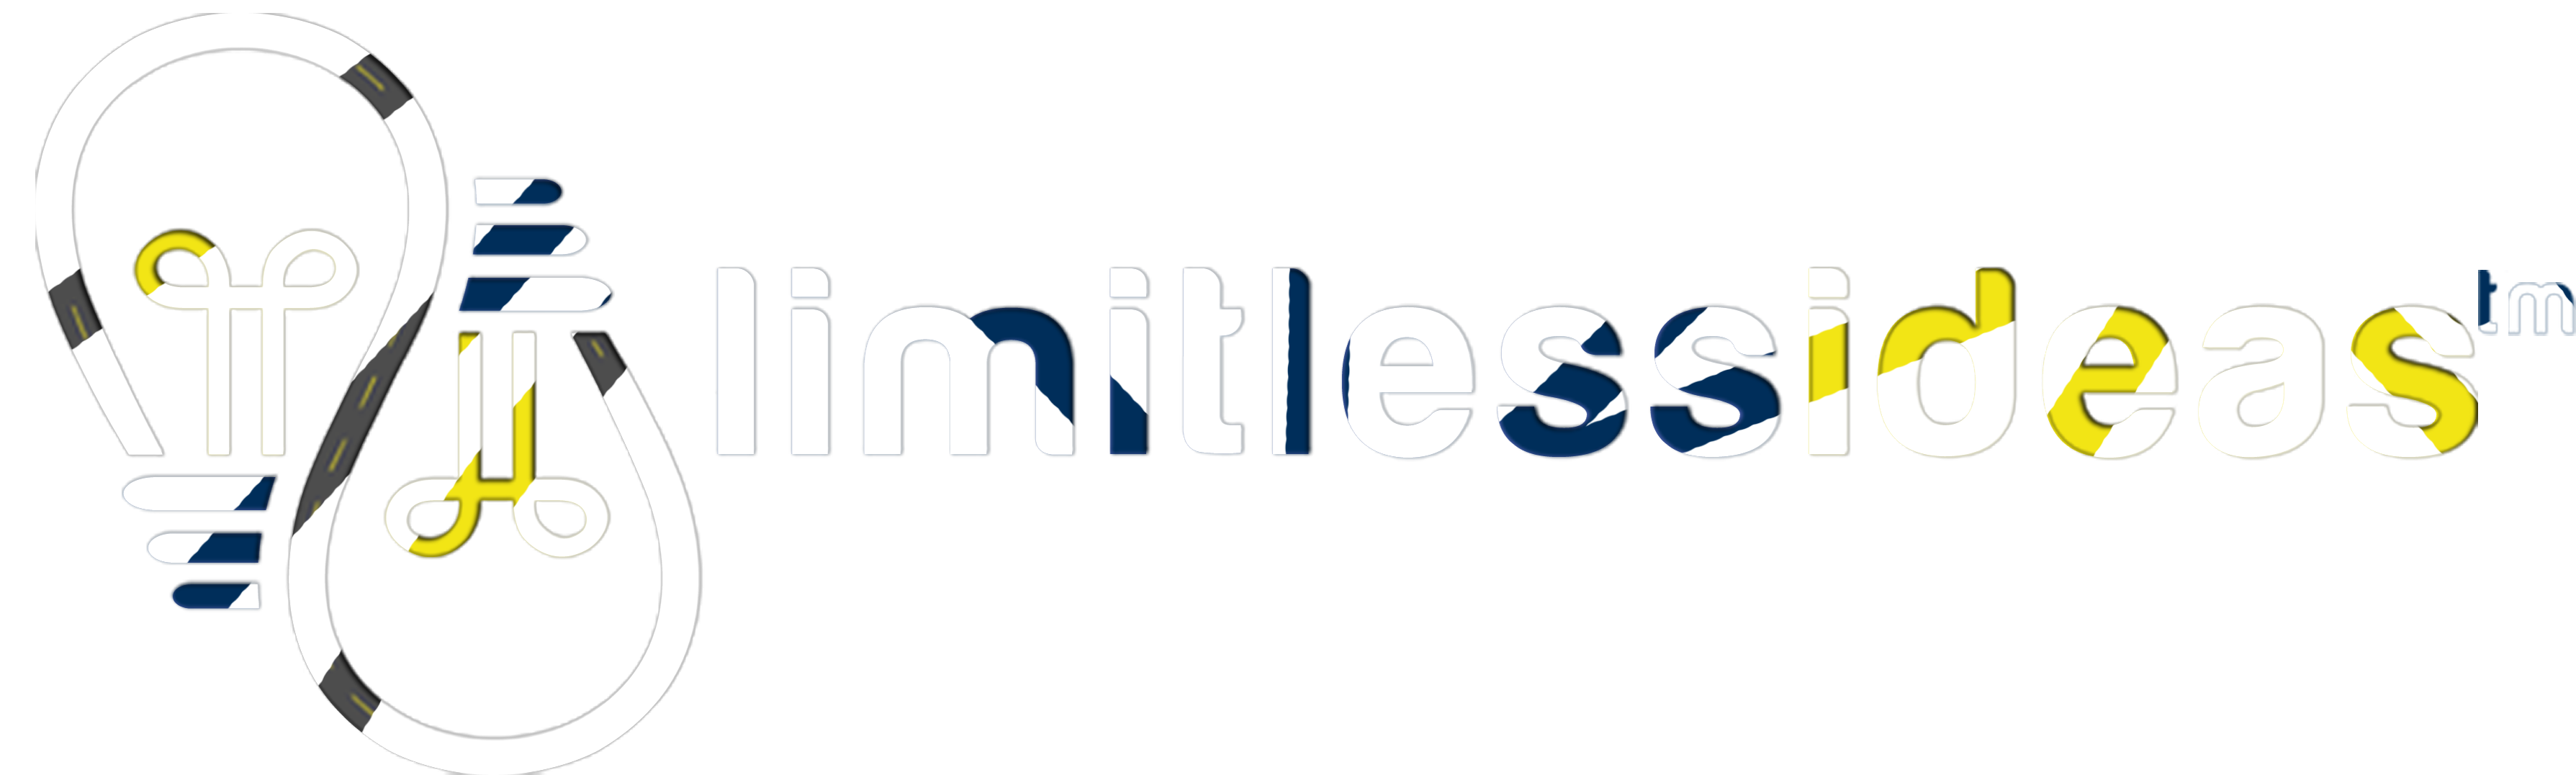 Limitless Ideas, LLC